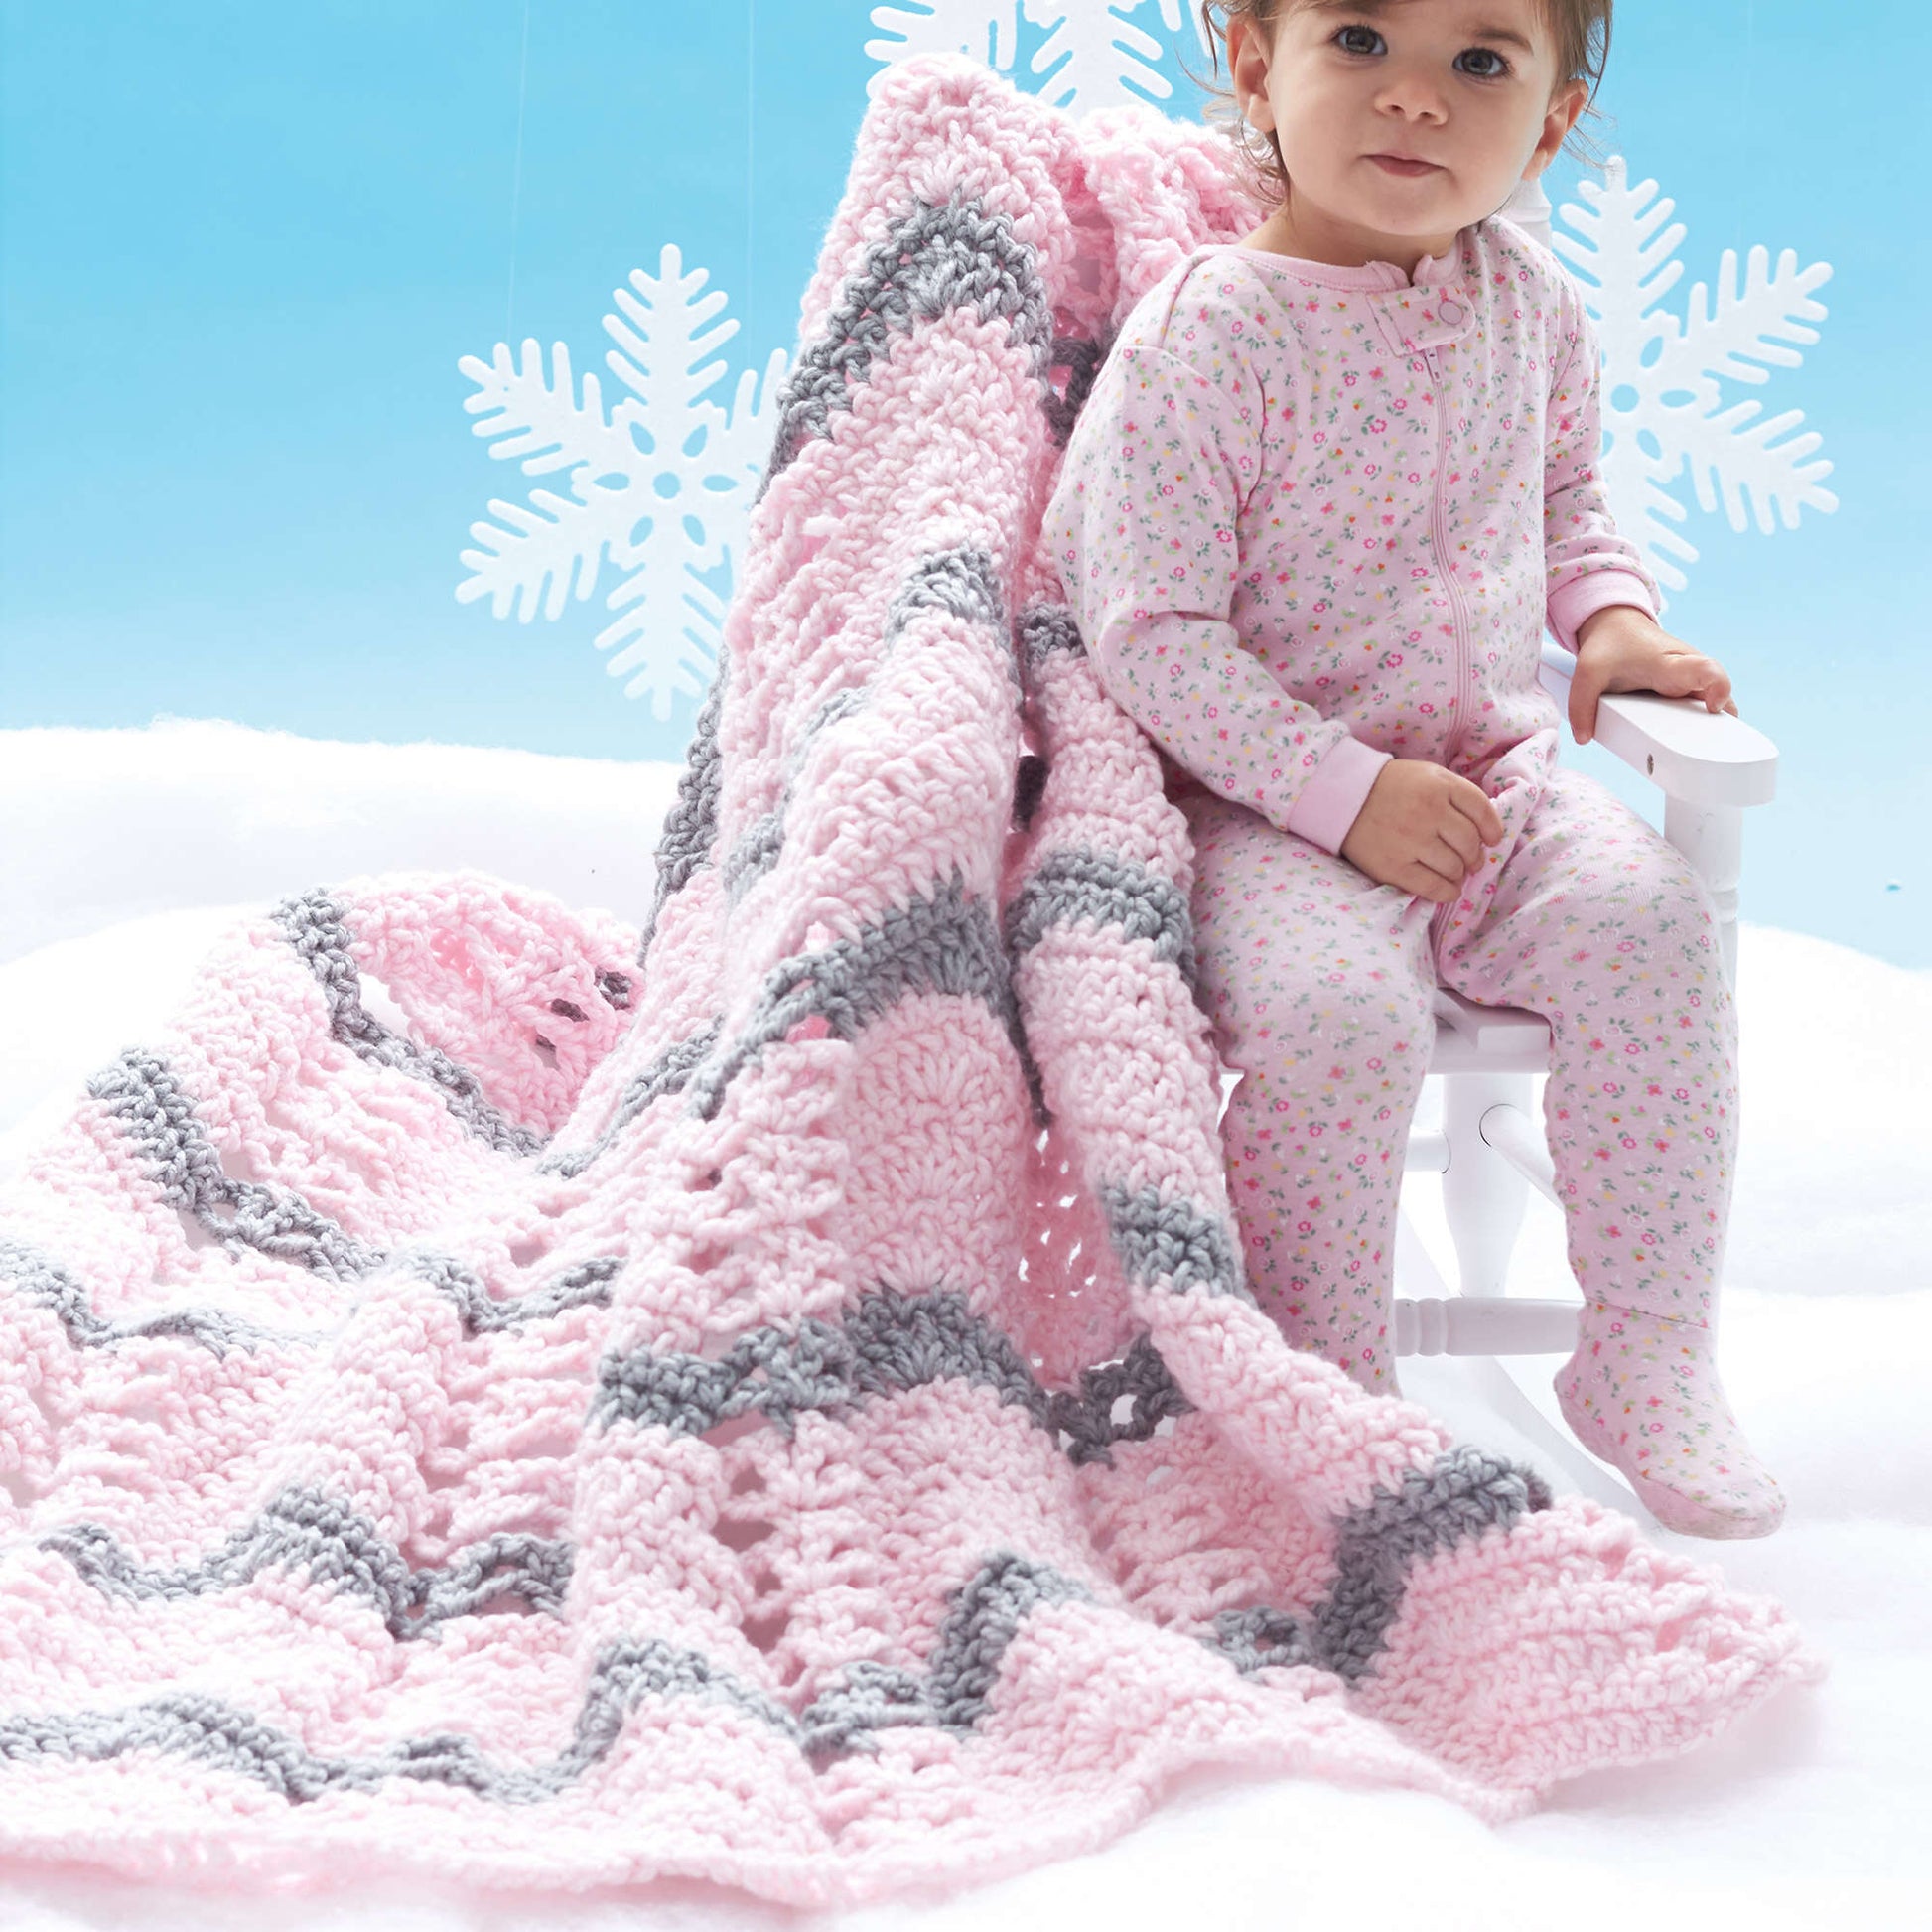 Free Bernat Quick And Coziest Crochet Blanket Pattern